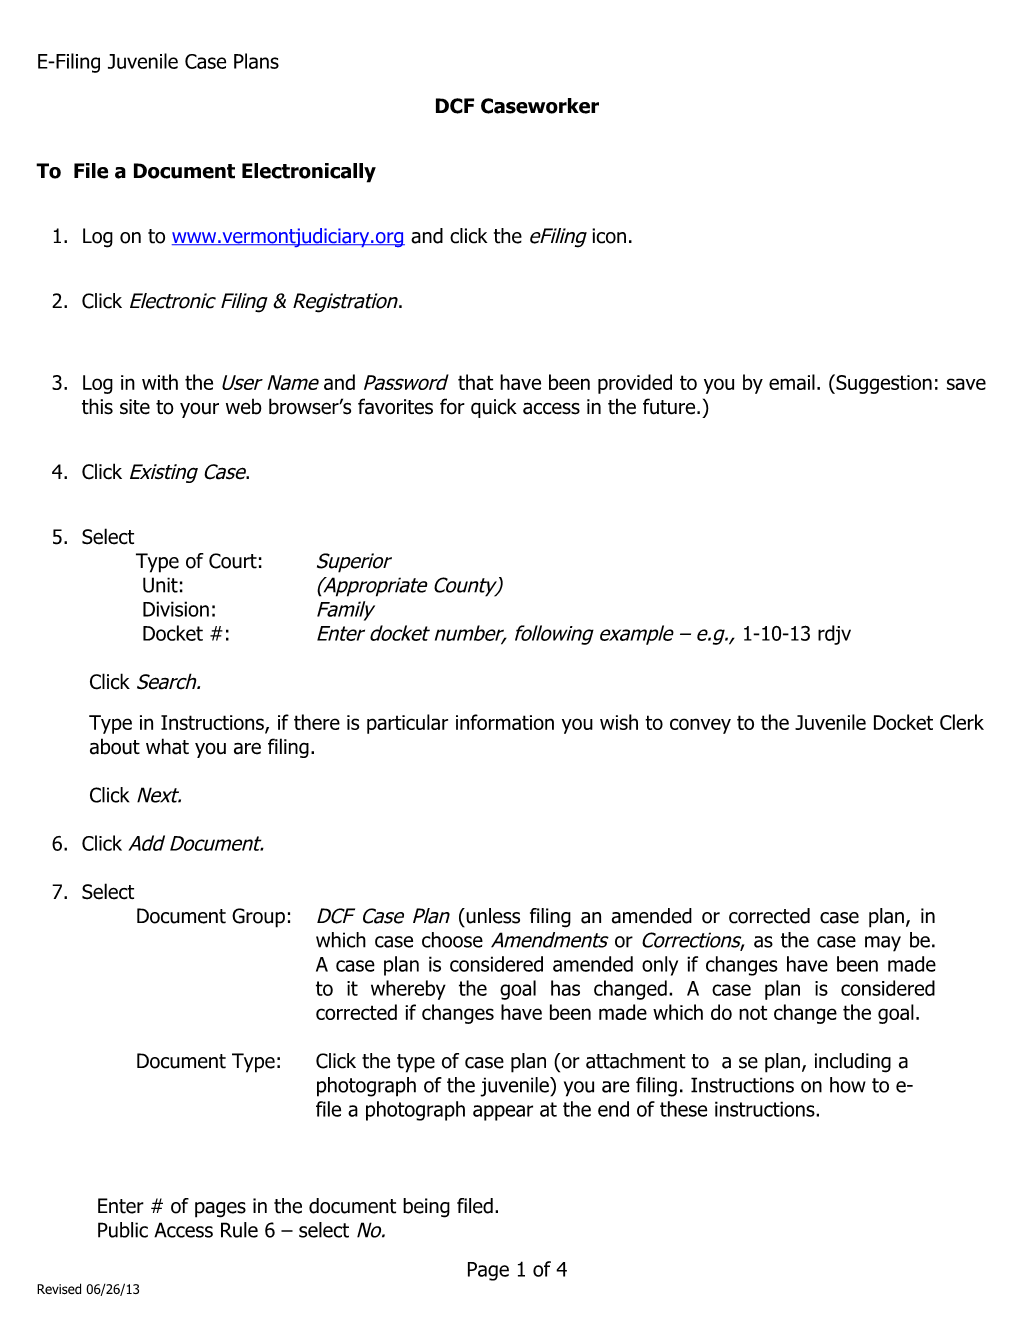 DCF Caseworker E-Filing Instructions Short Version Revised 3-18-14